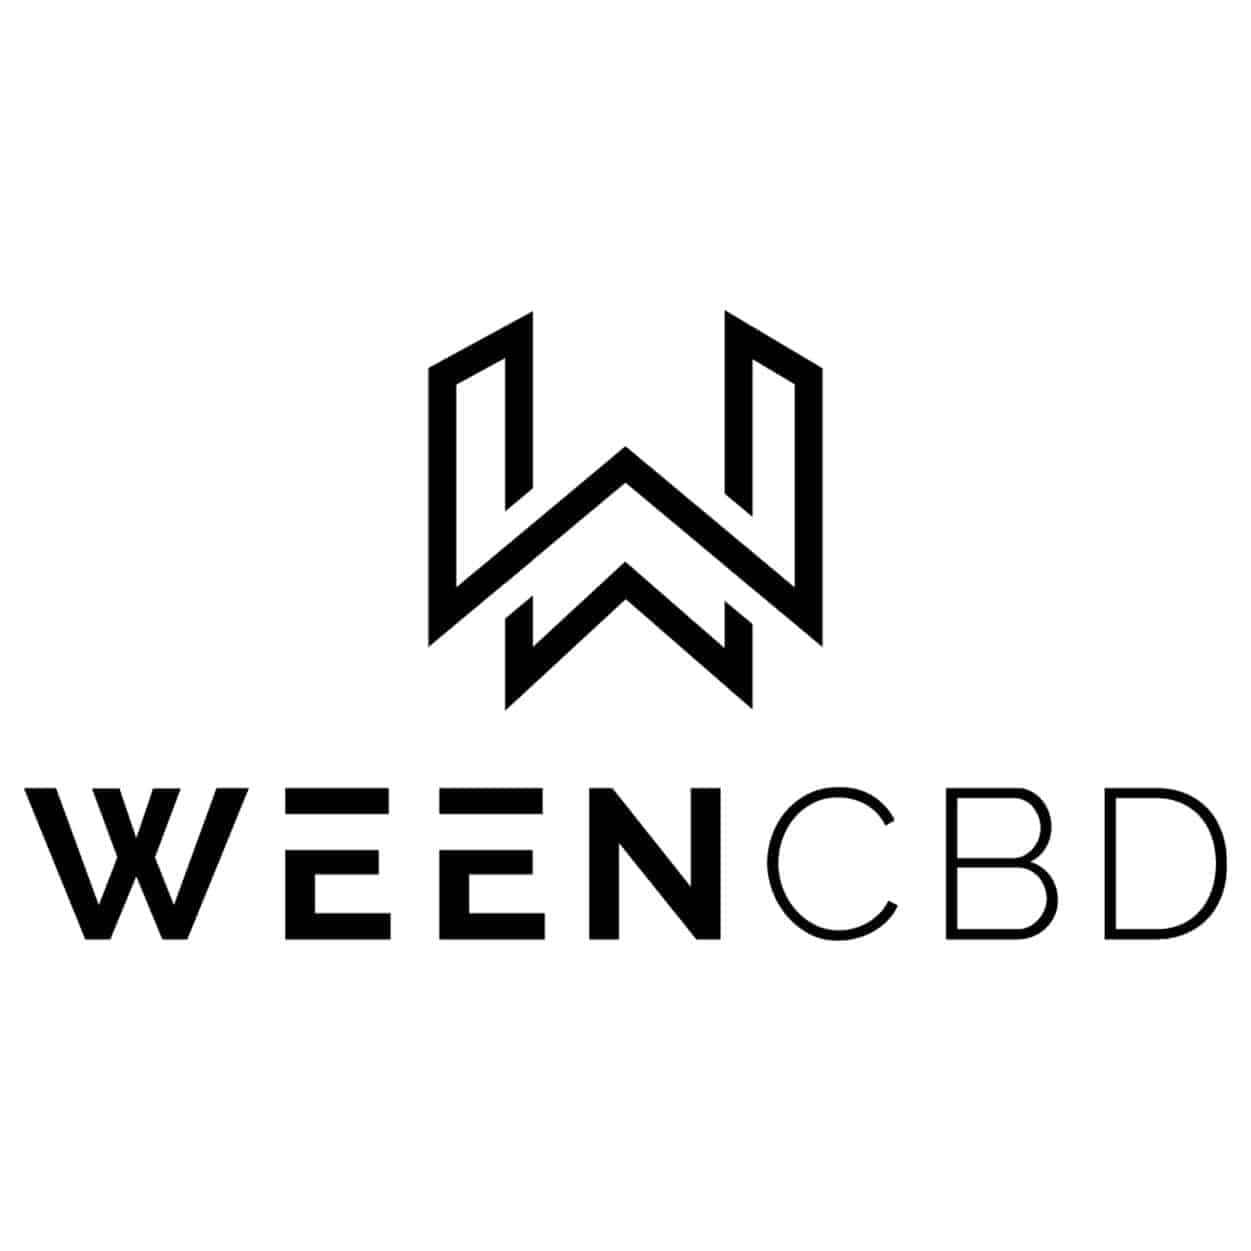 ween-cbd-logo